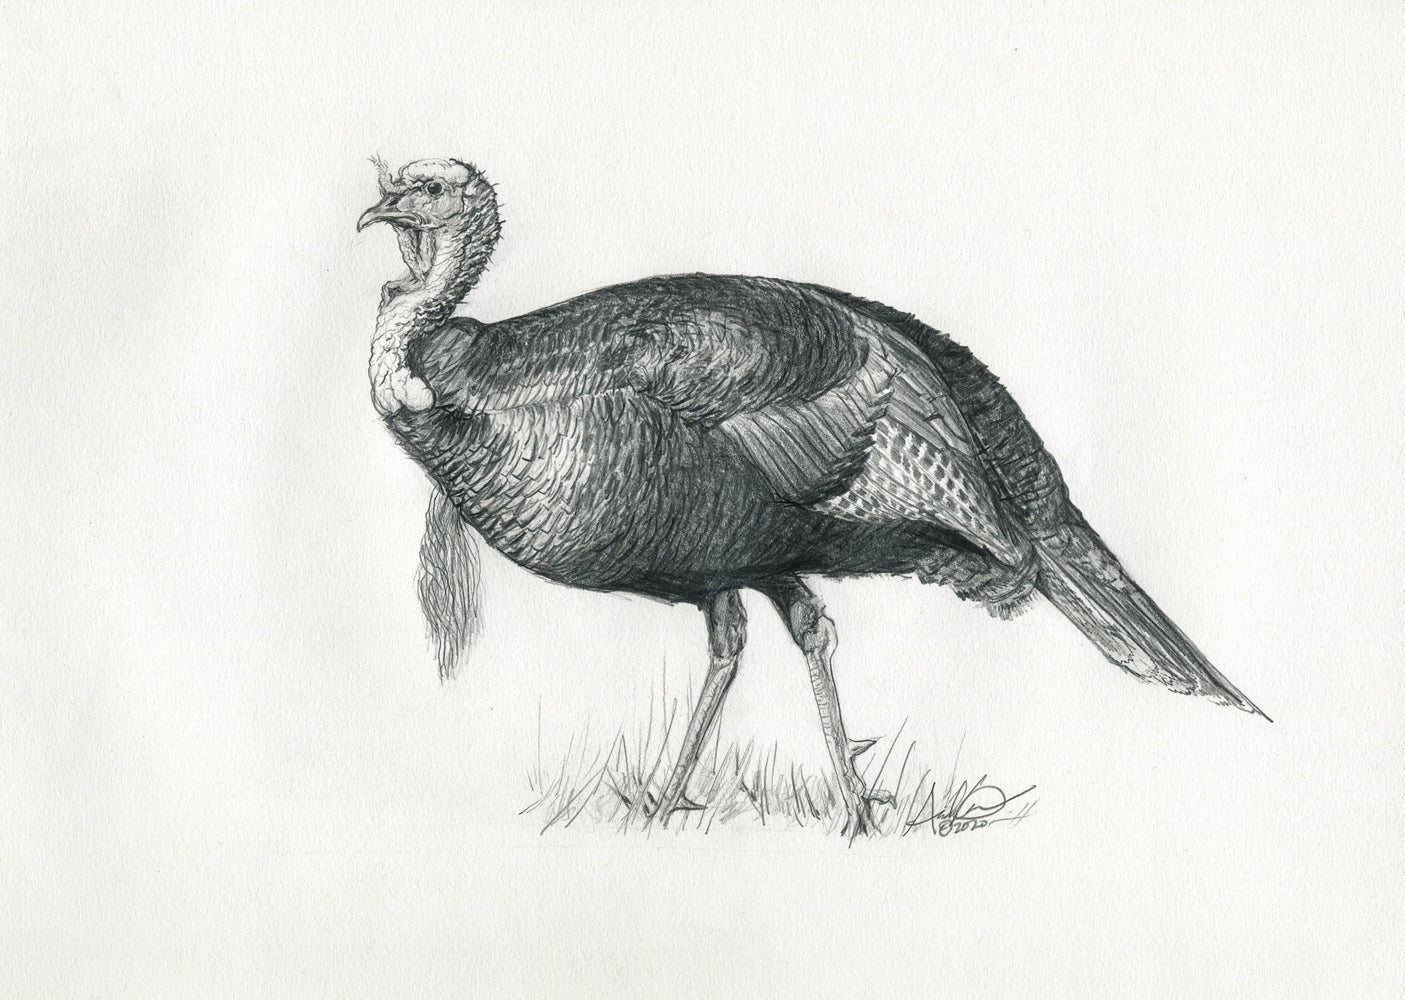 Original Turkey Illustration in Pencil, 8x10"